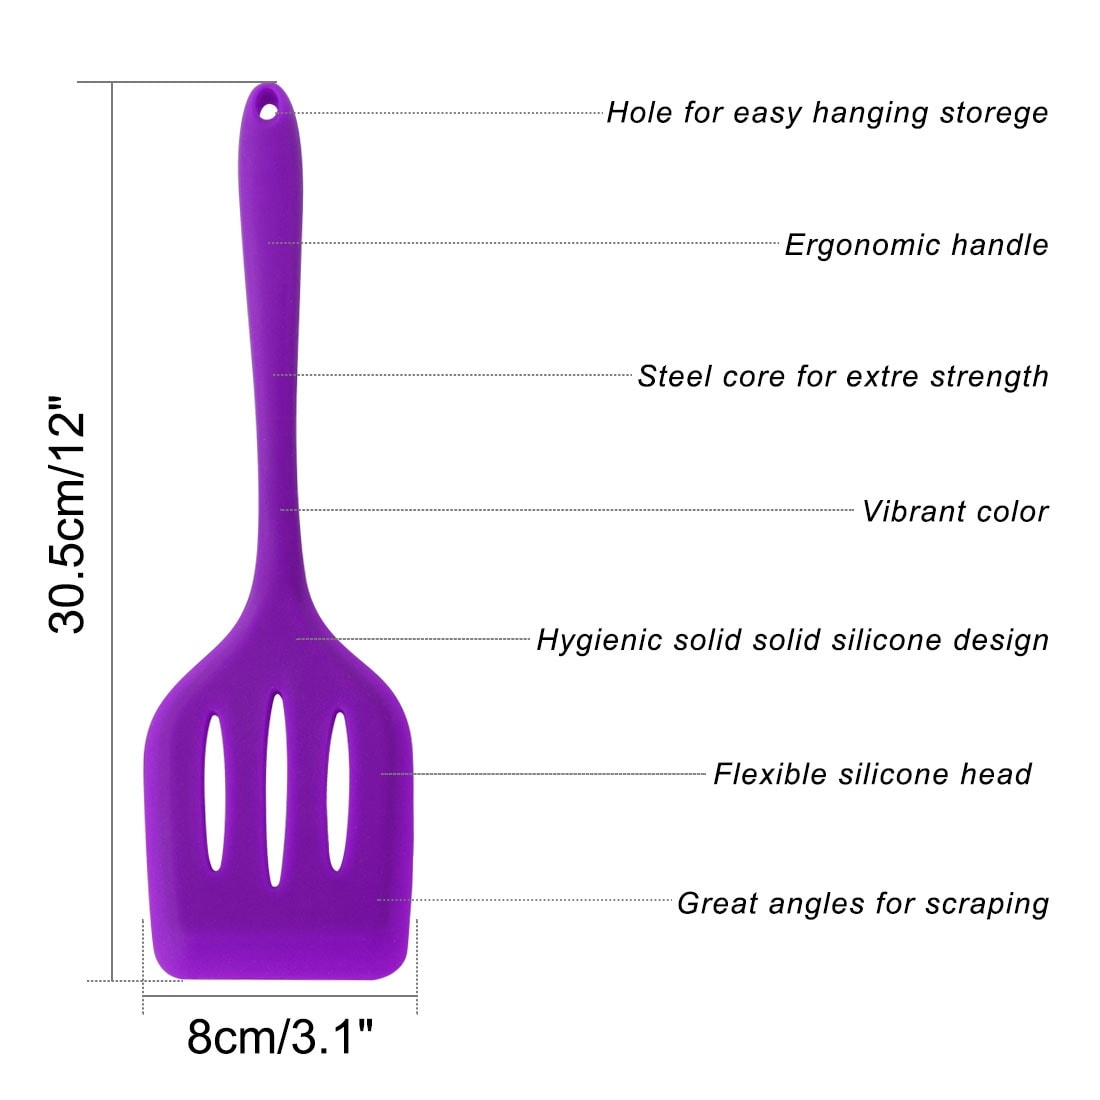 Heat Resistant 14 inch Extra Large Silicone Spatula | U-Taste Purple